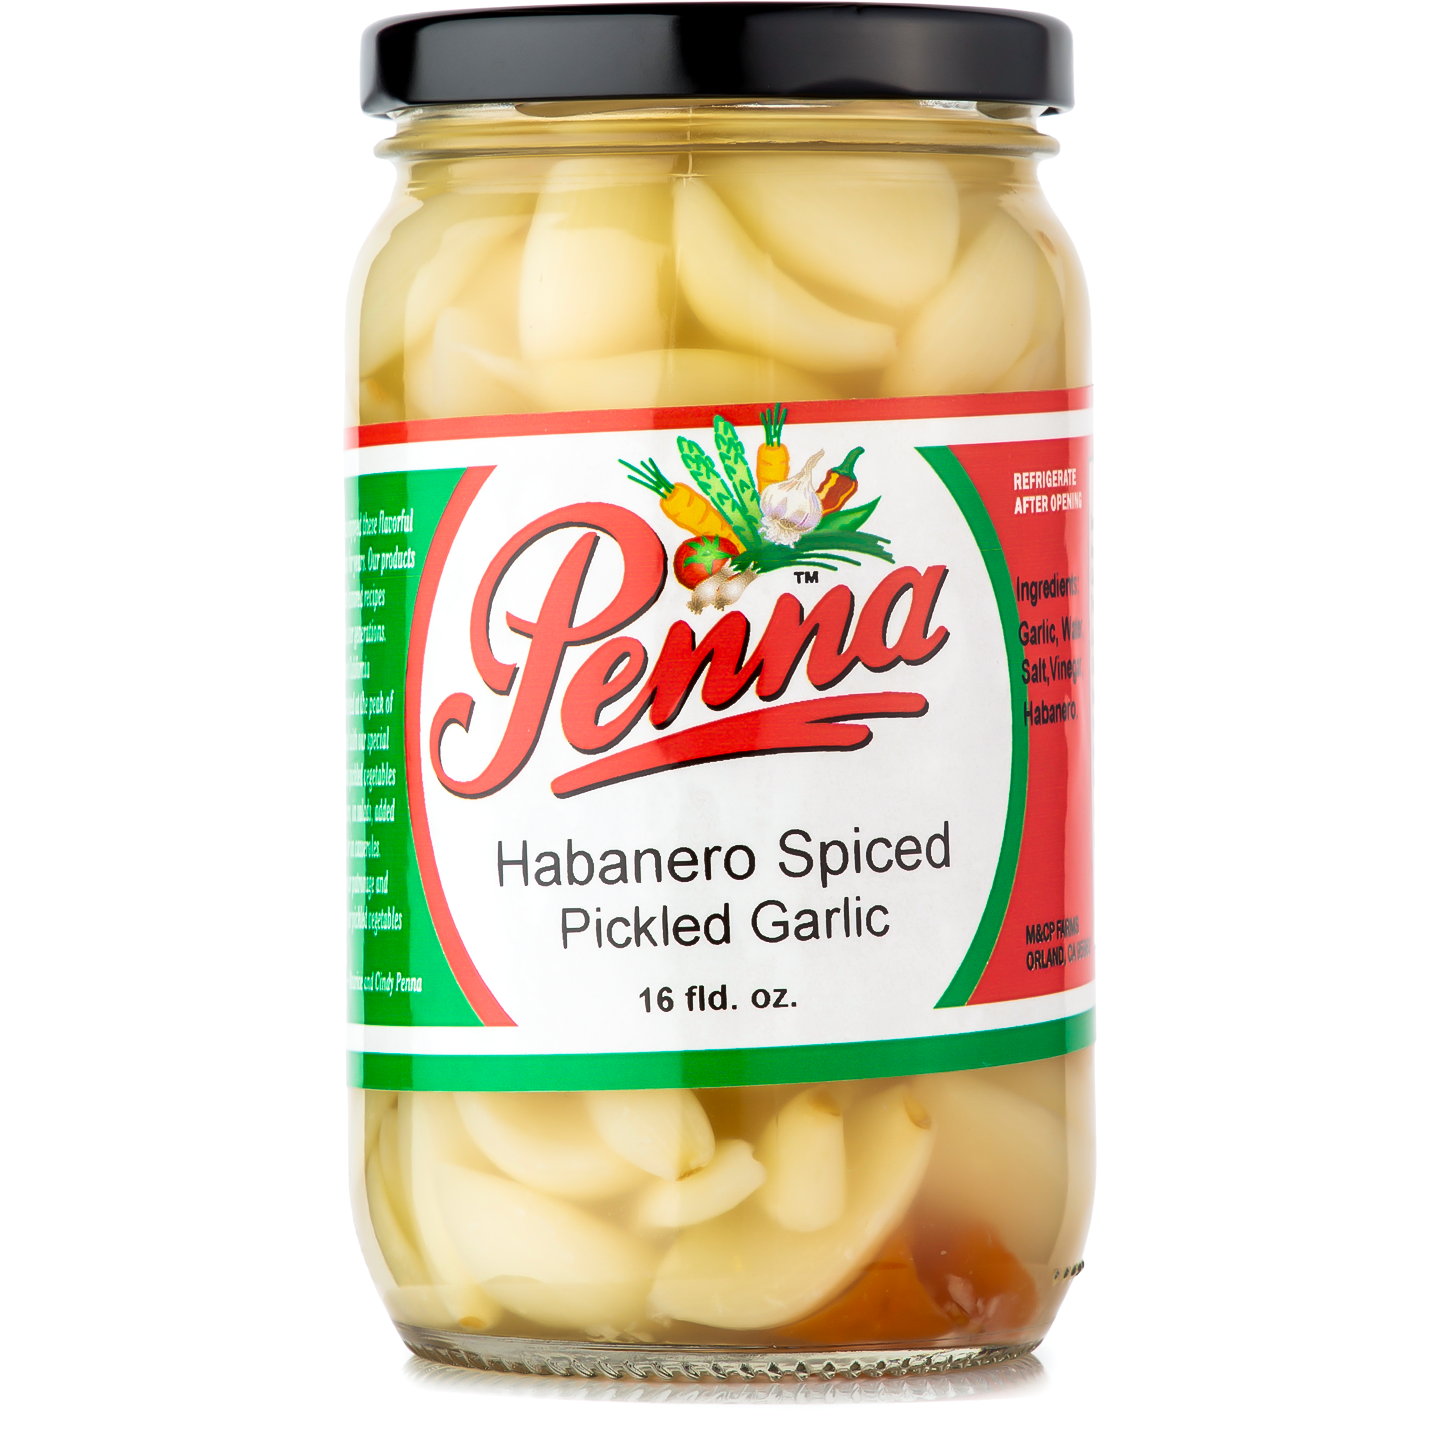 Habanero Spiced Pickled Garlic